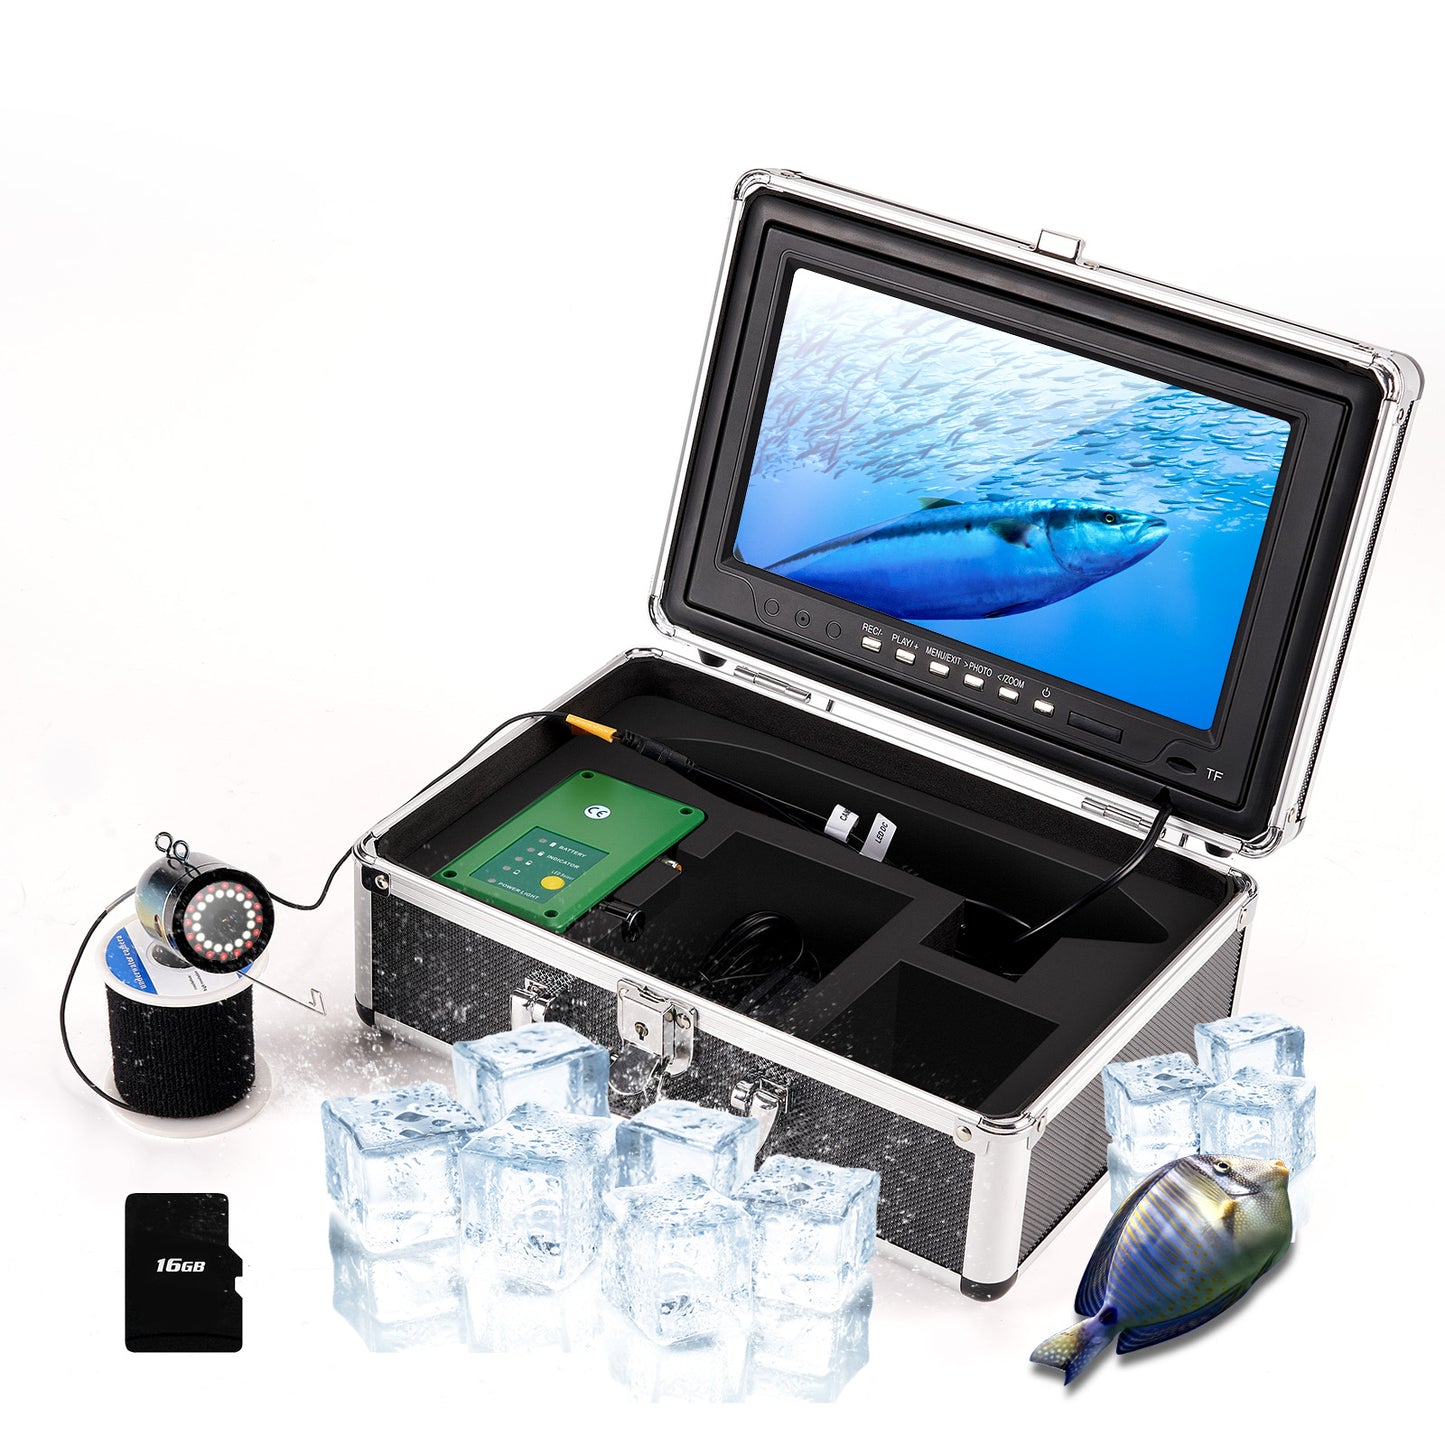 10.1 Inch 720P Underwater Fishing Camera, Ice Fishing Camera DVR Recording, White & IR Lights